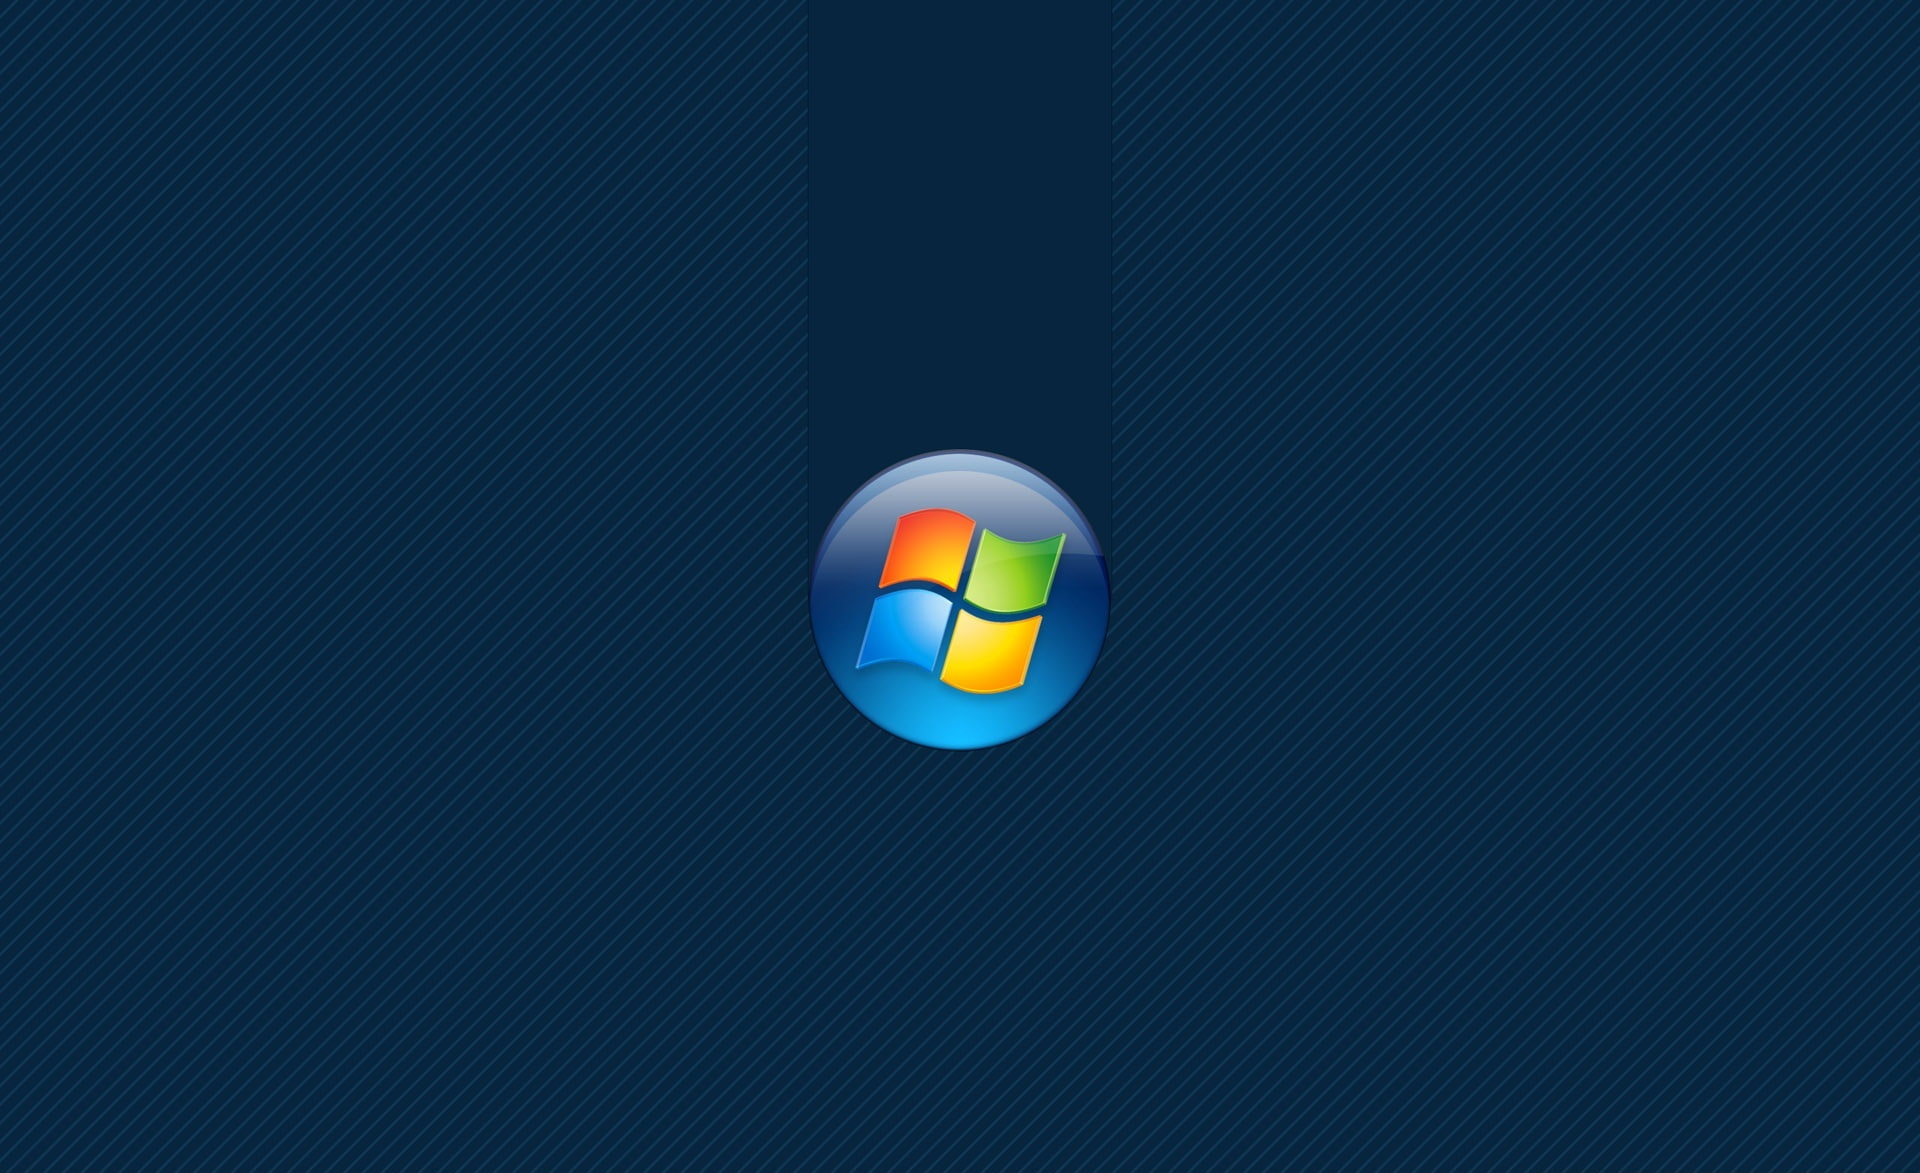 Windows Vista Aero 24, Microsoft Windows logo, medicine, no people